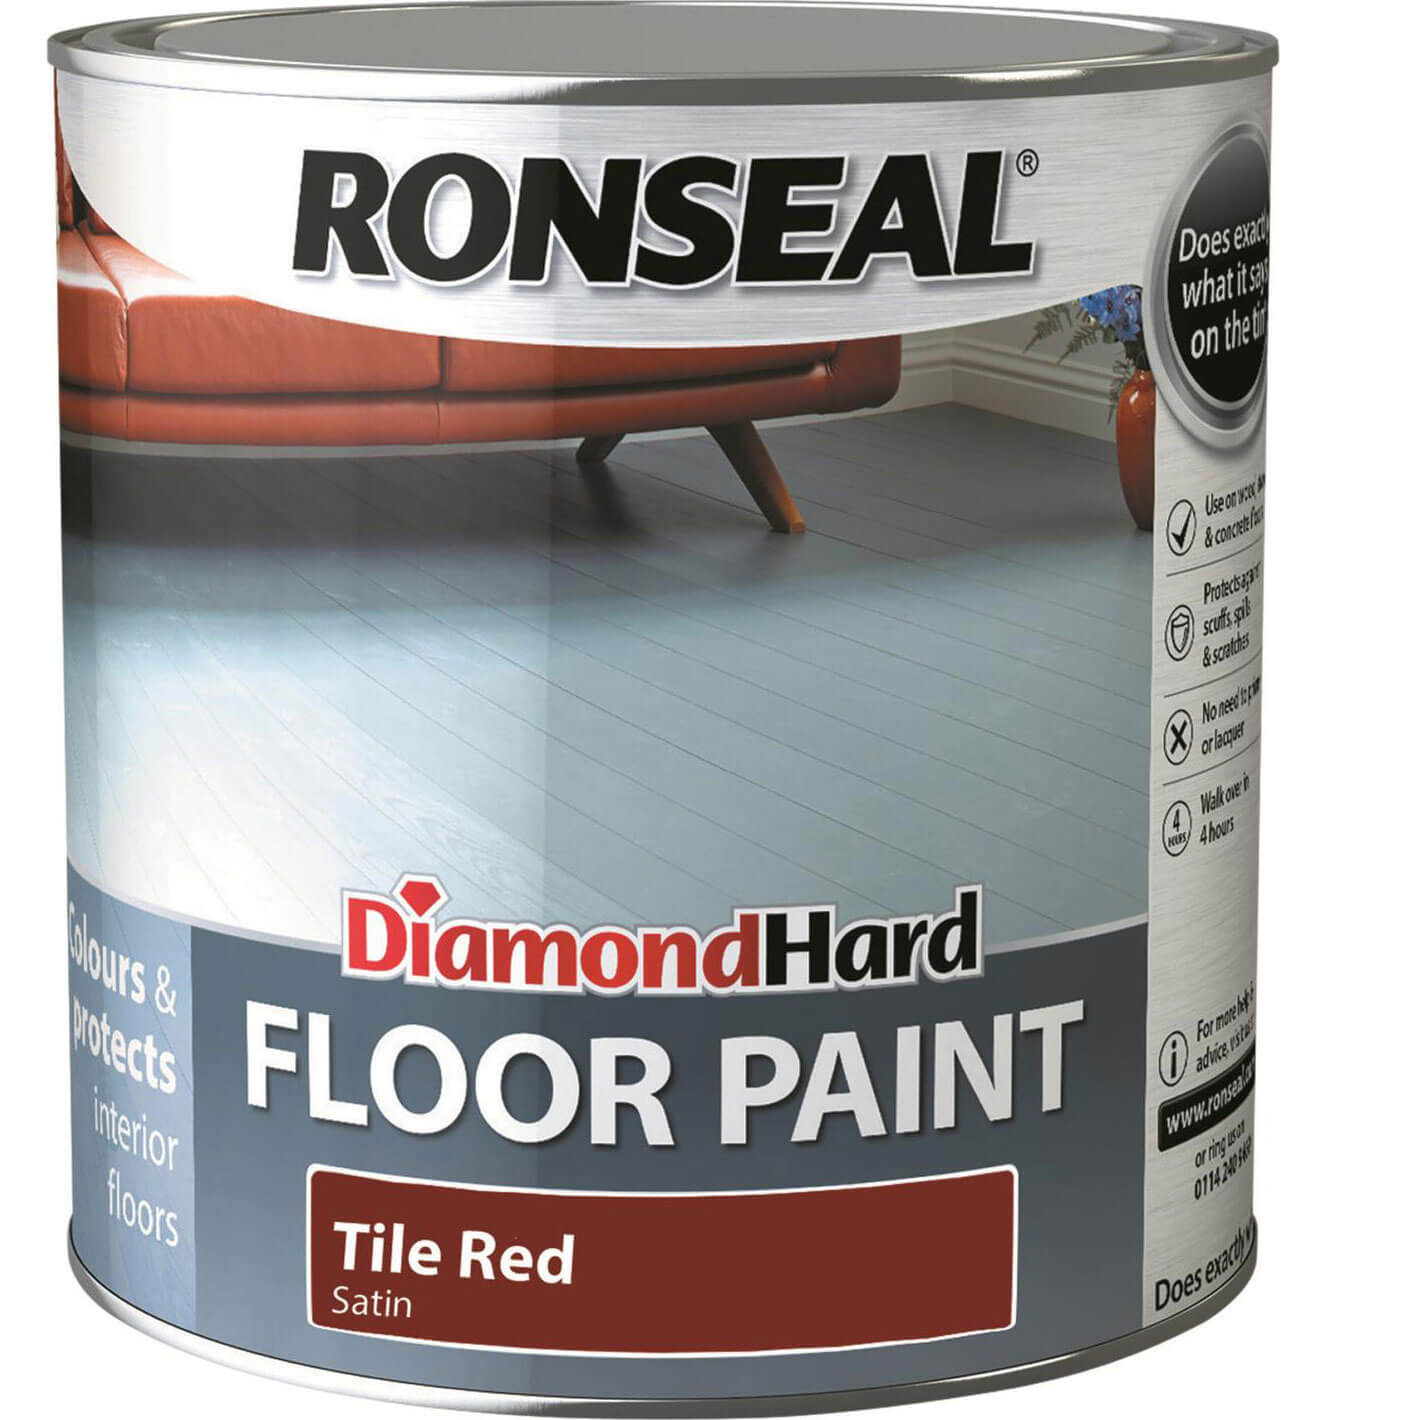 Photos - Varnish Ronseal Diamond Hard Floor Paint Tile Red 2.5l